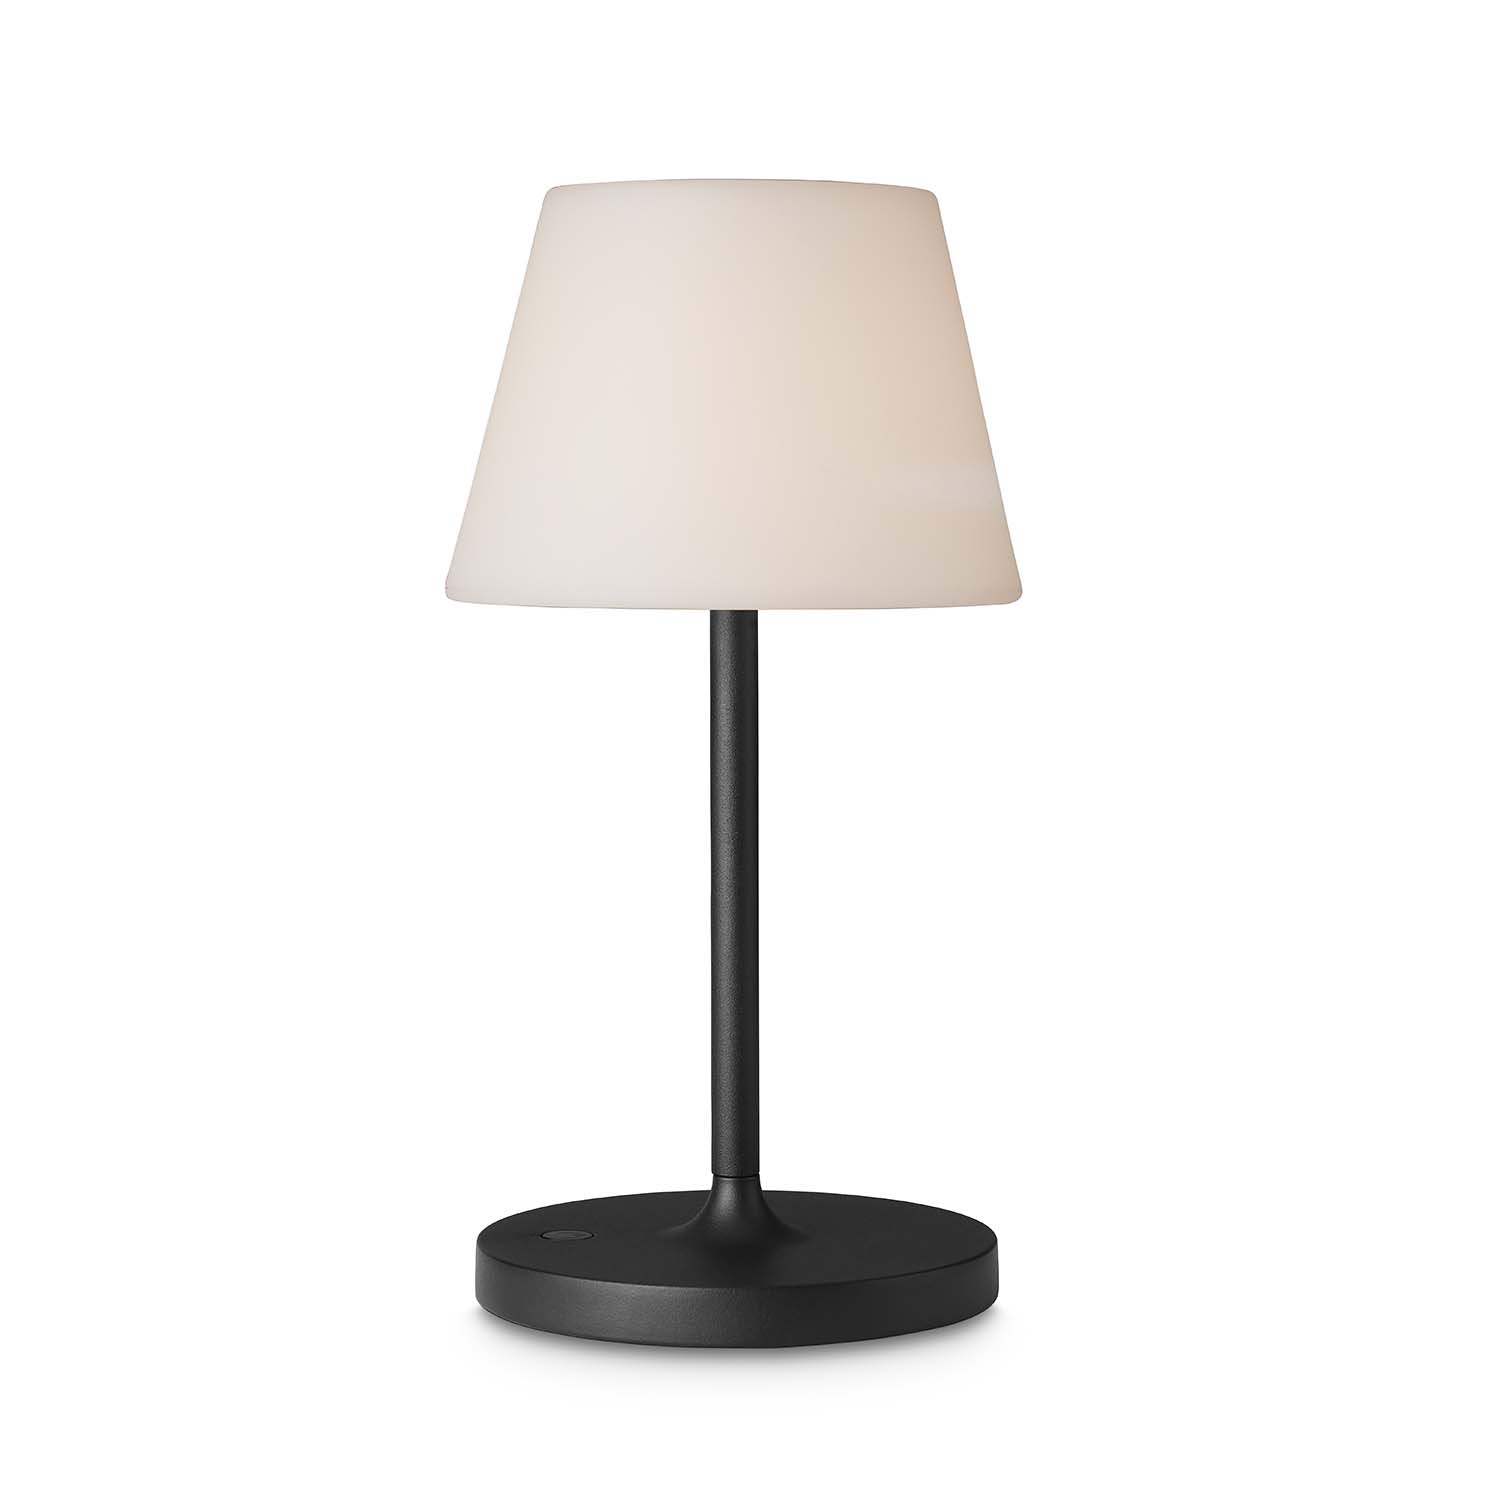 NEW NORTHERN - Wireless designer nomadic table lamp